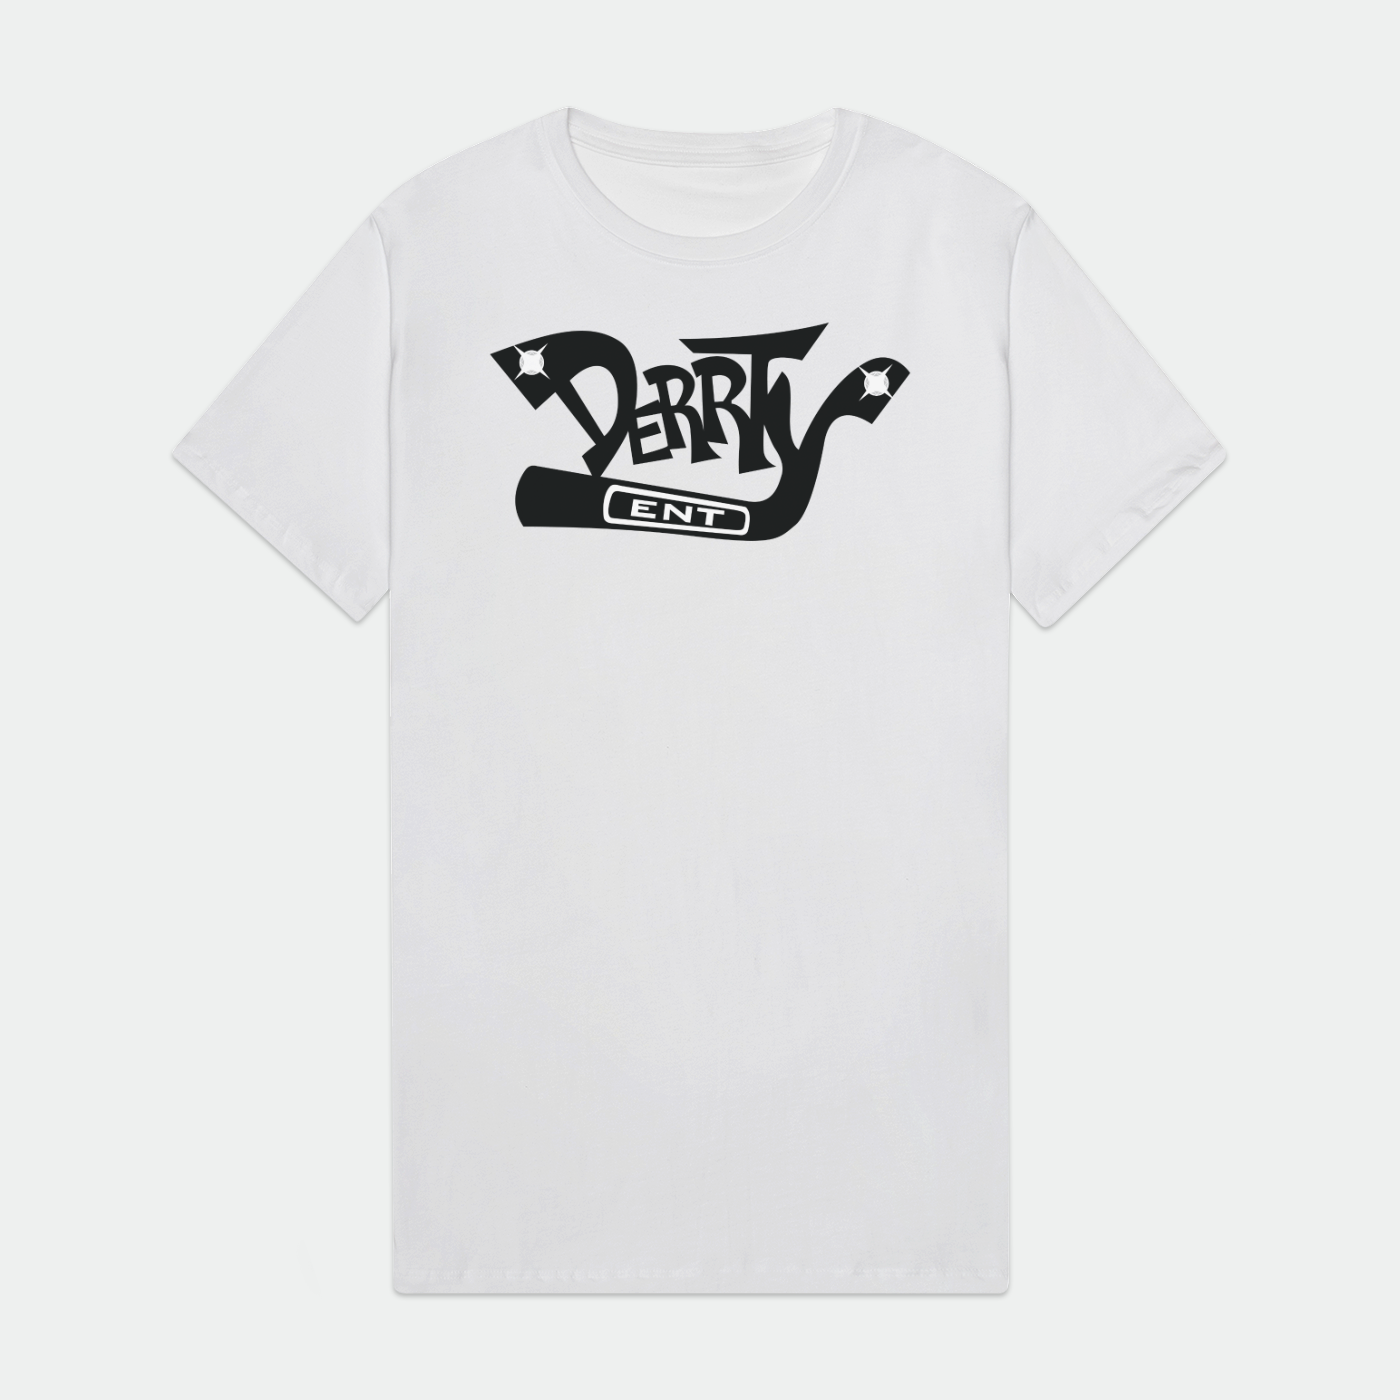 Derrty Ent Classic Logo Mens Supima Tee